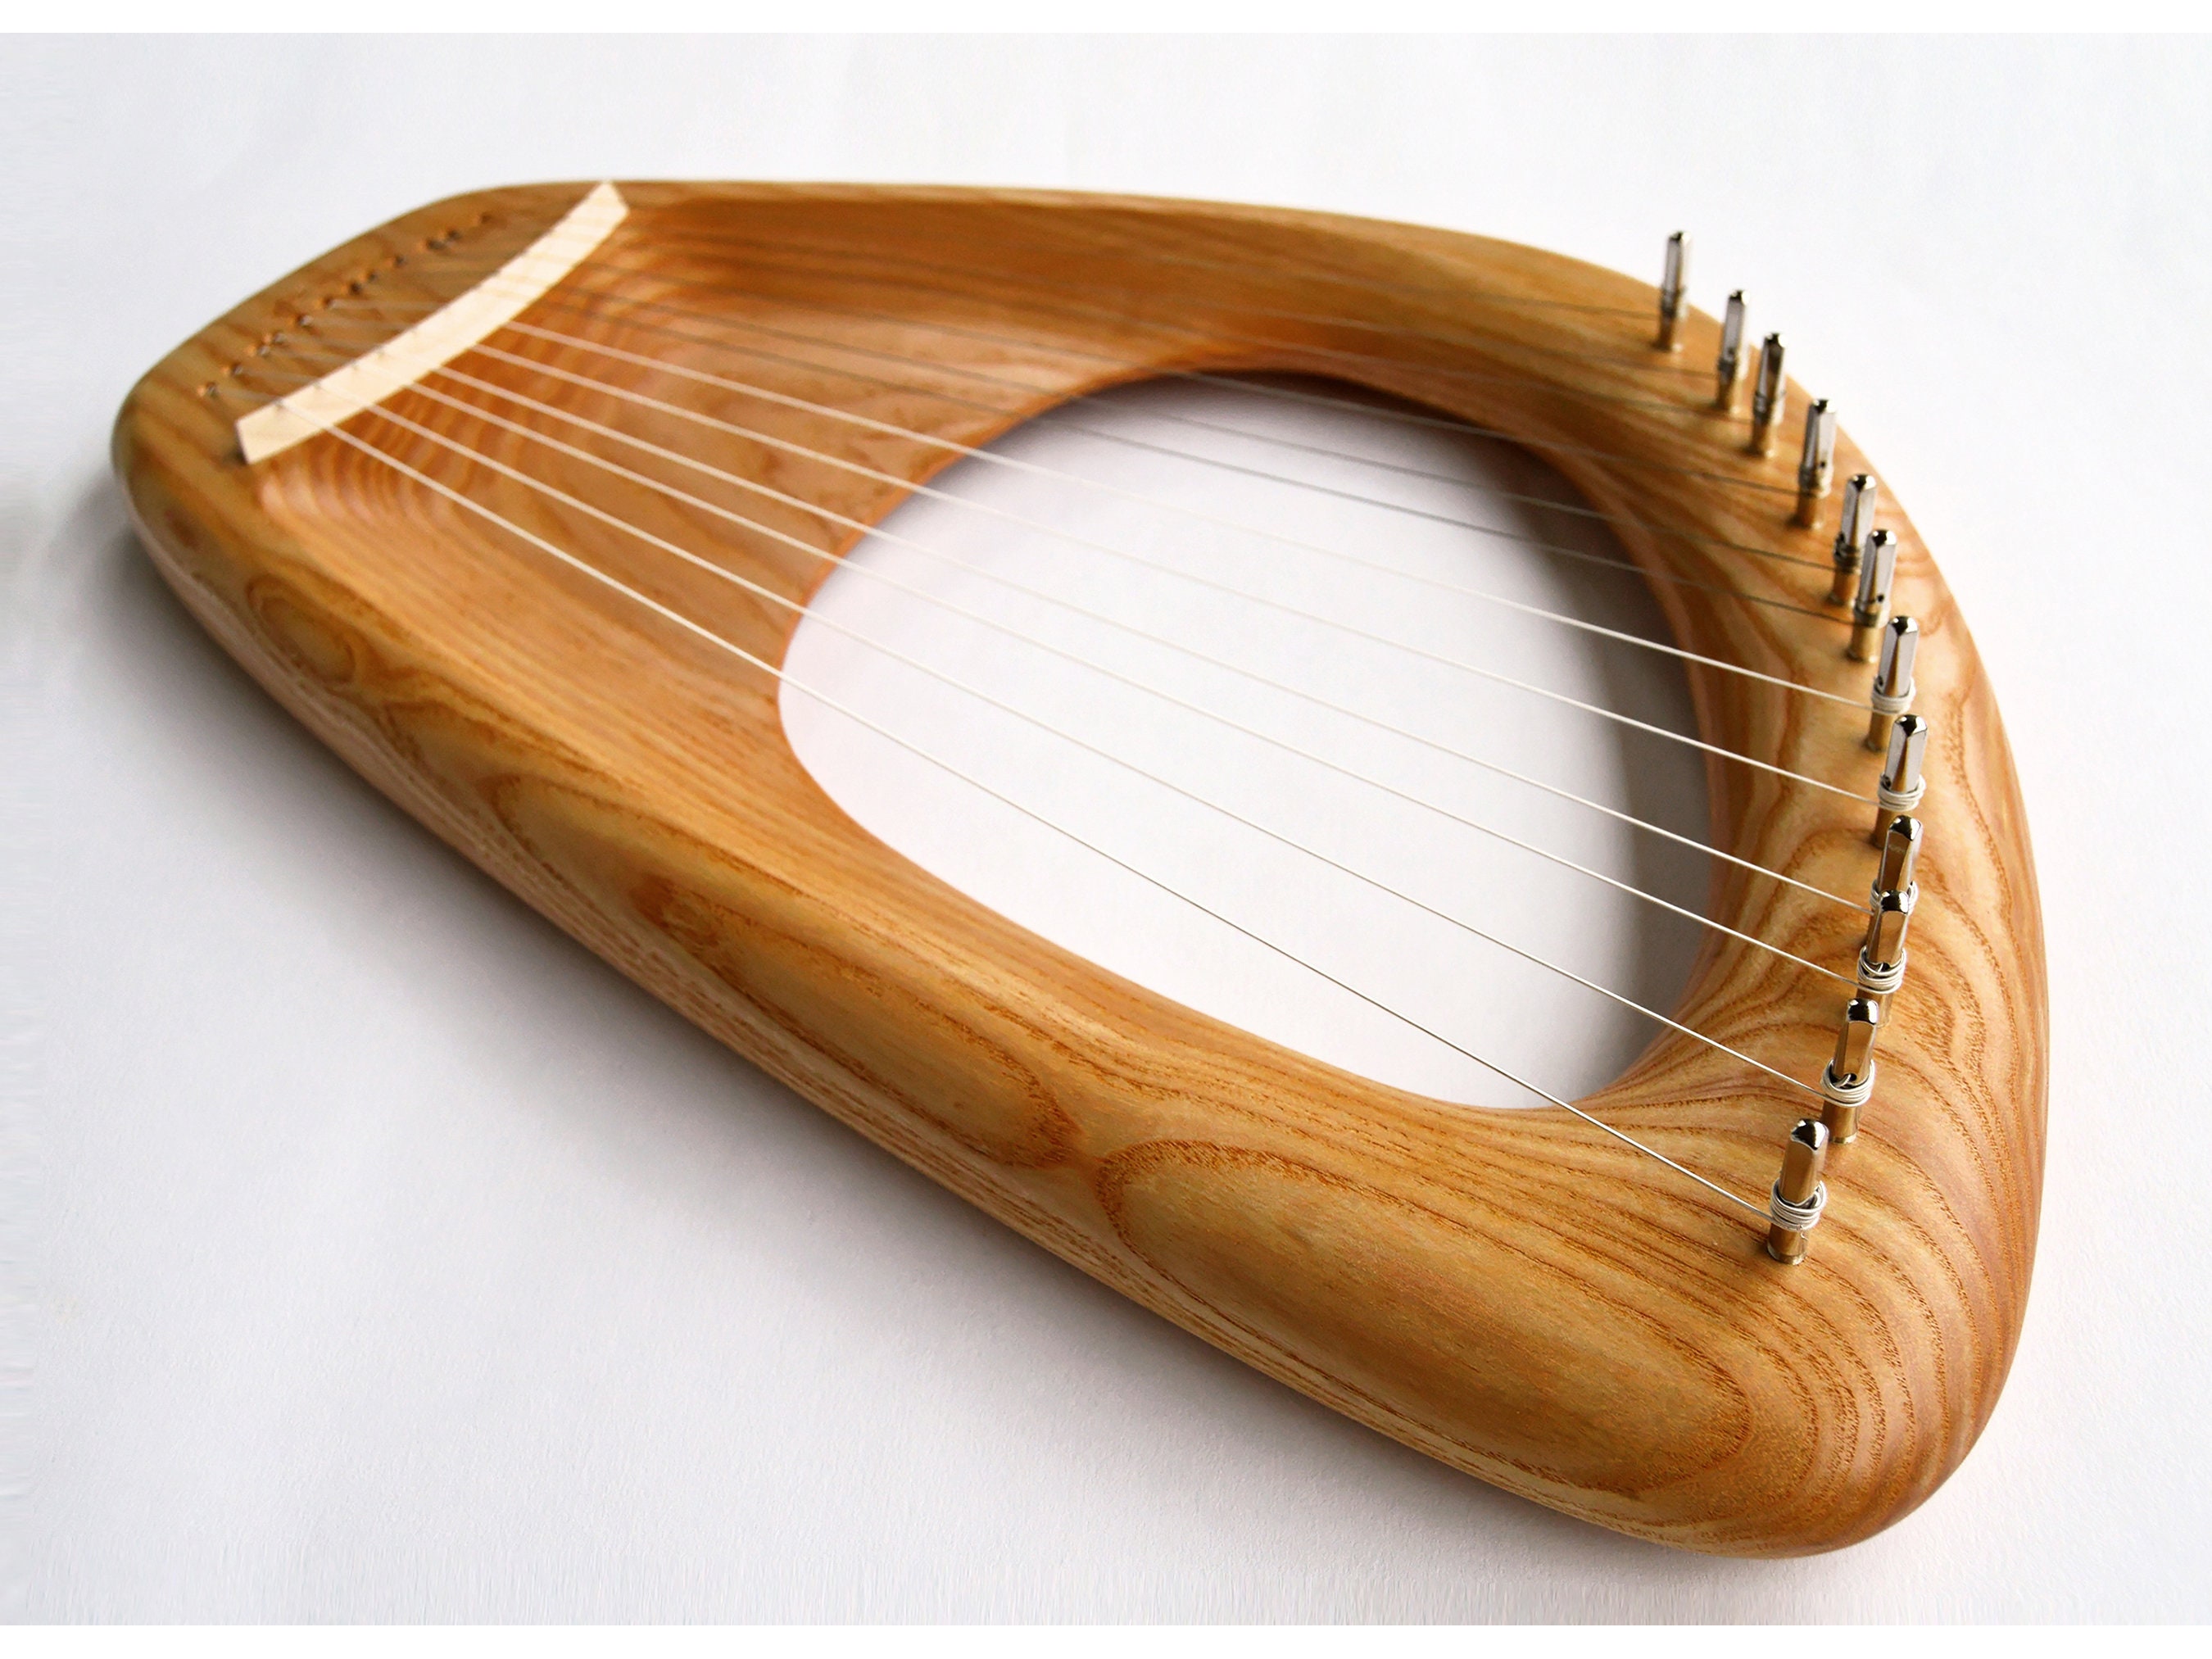 Lyre harp, 12 String Diatonic Lyre Musical Instrument, Ash Wood 